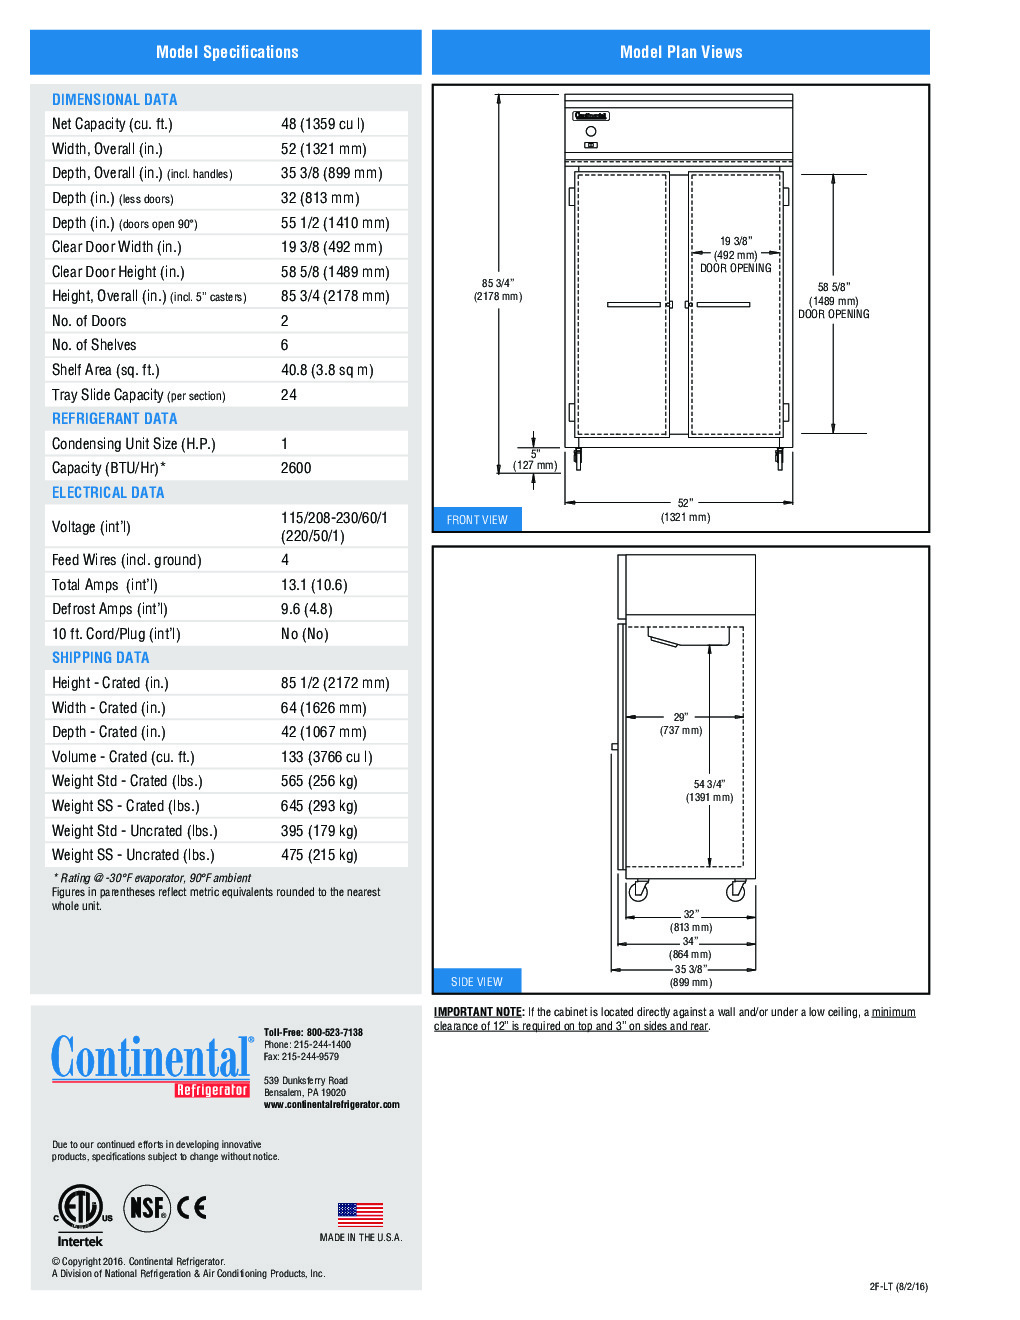 Continental Refrigerator 2F-LT-SS Reach-In Low Temperature Freezer